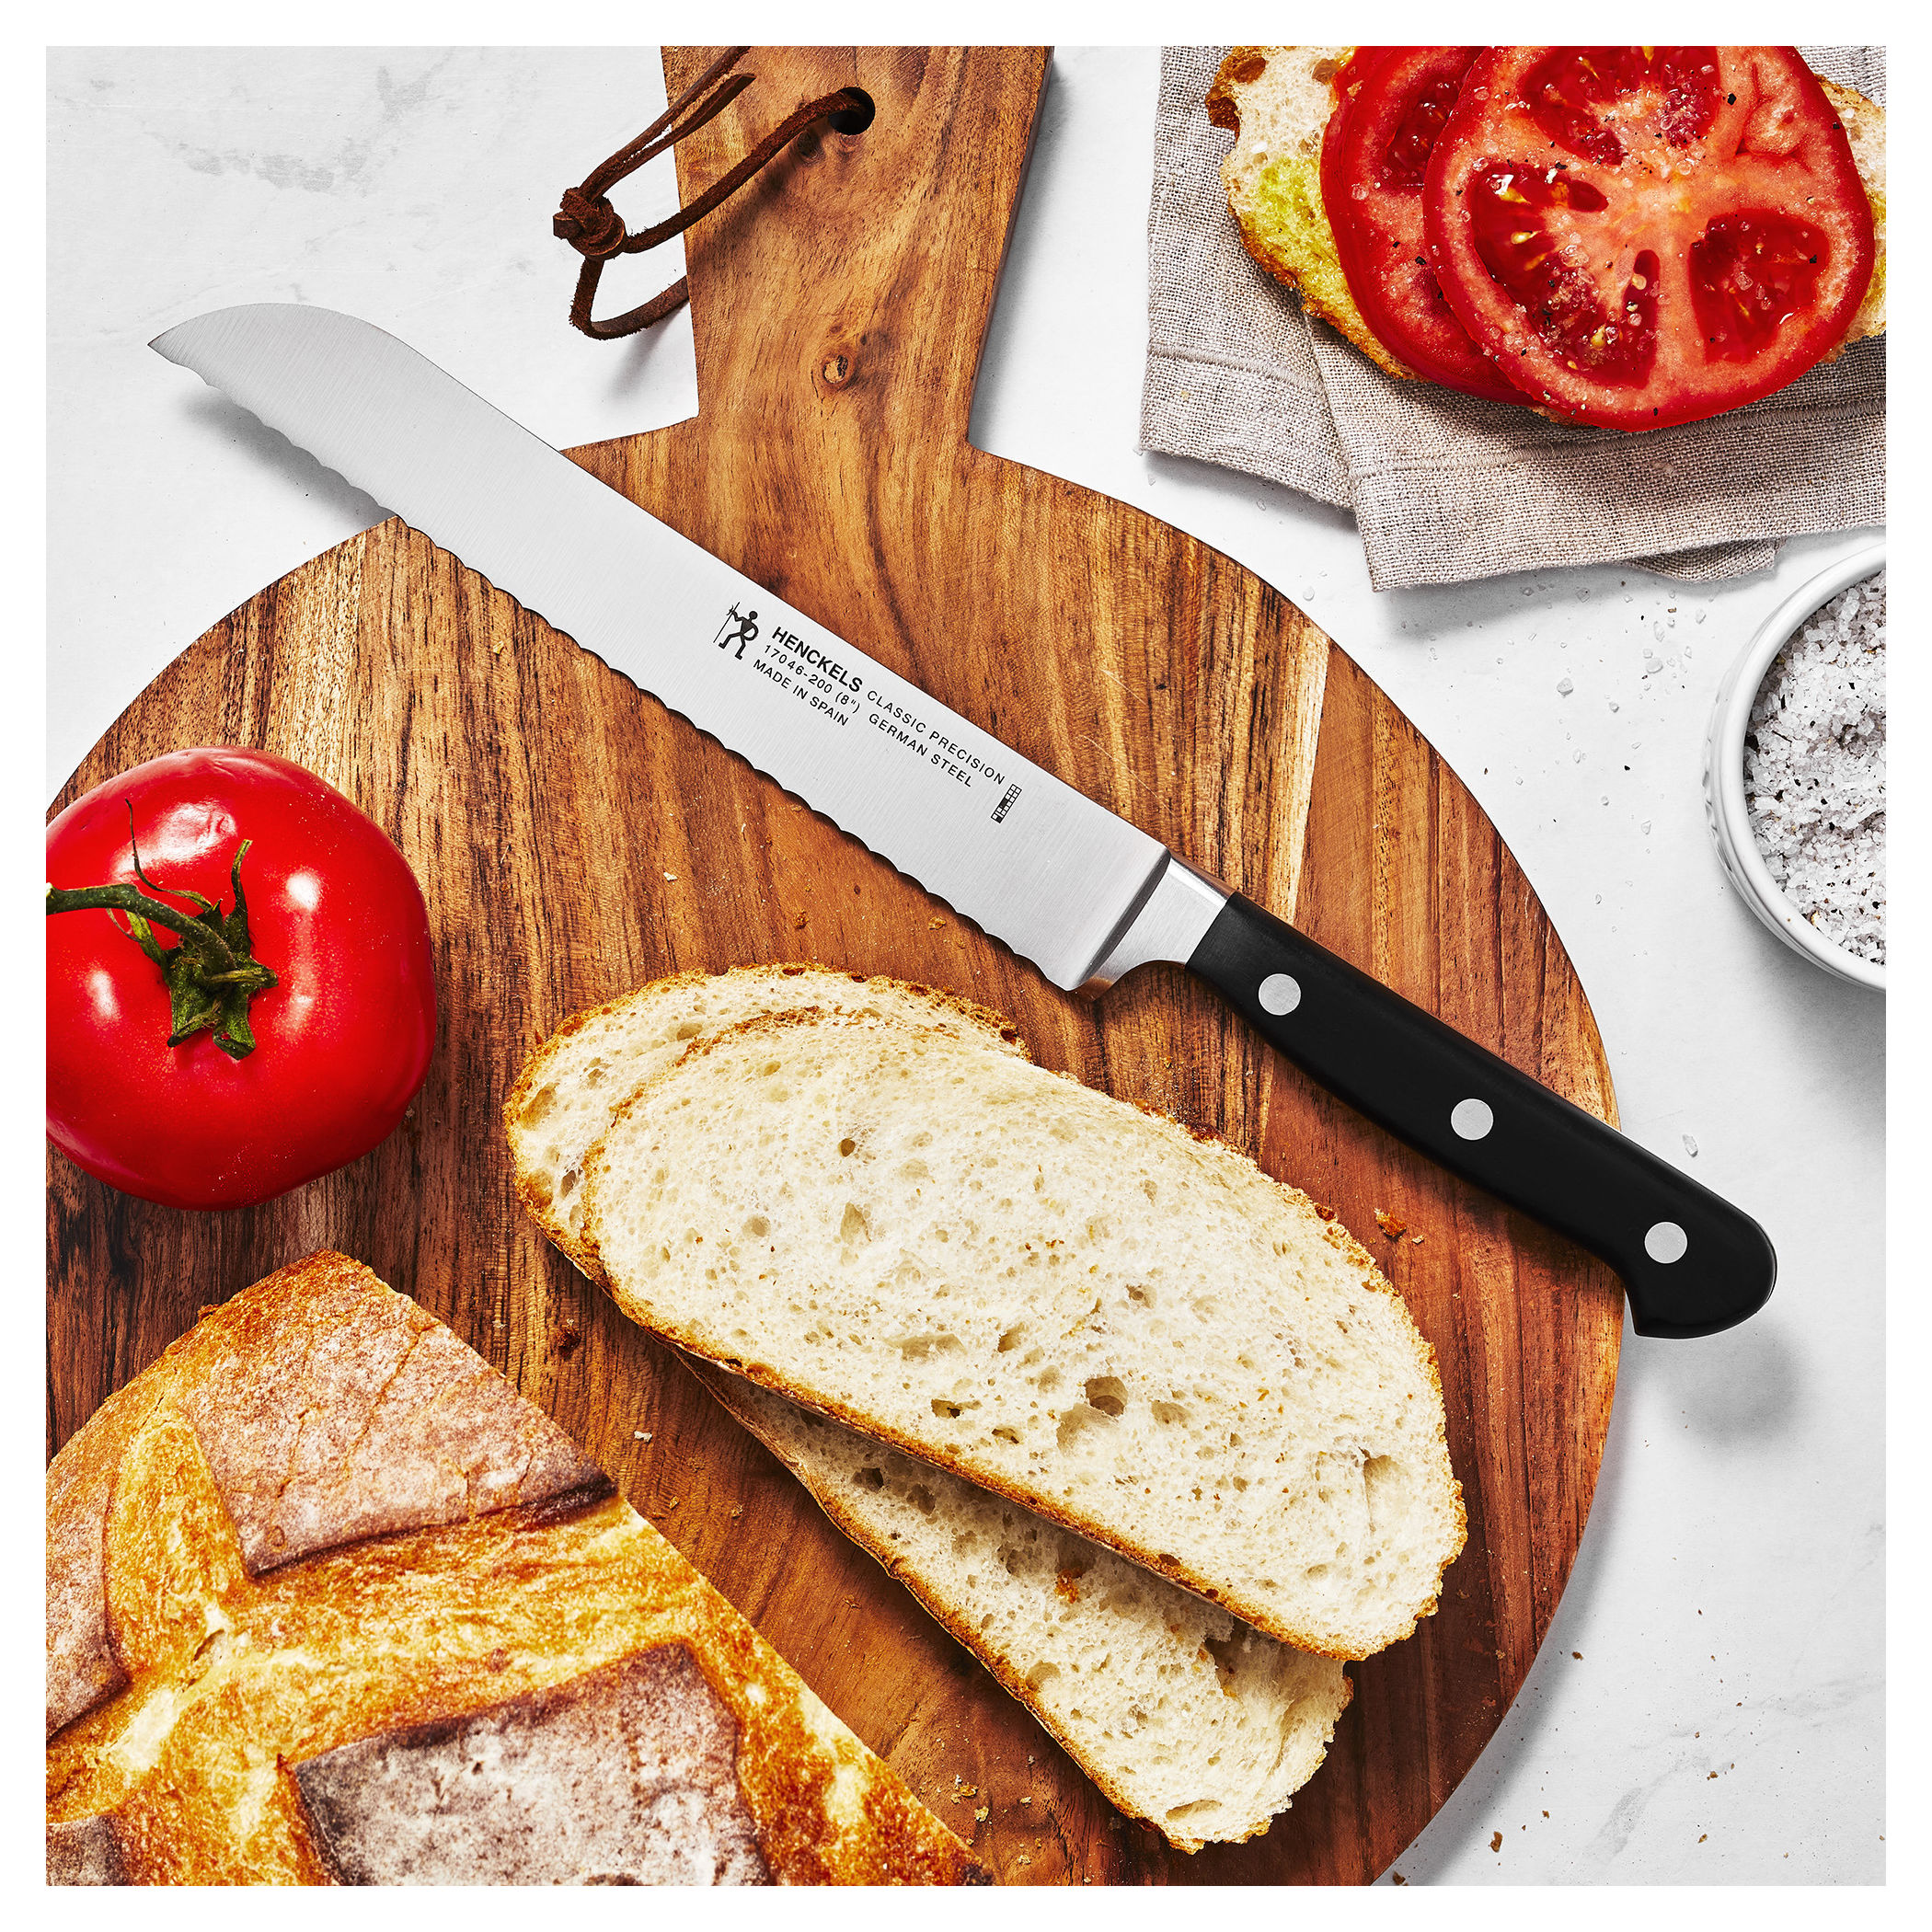 Henckels Classic Razor-sharp 8-inch Chef's Knife, German